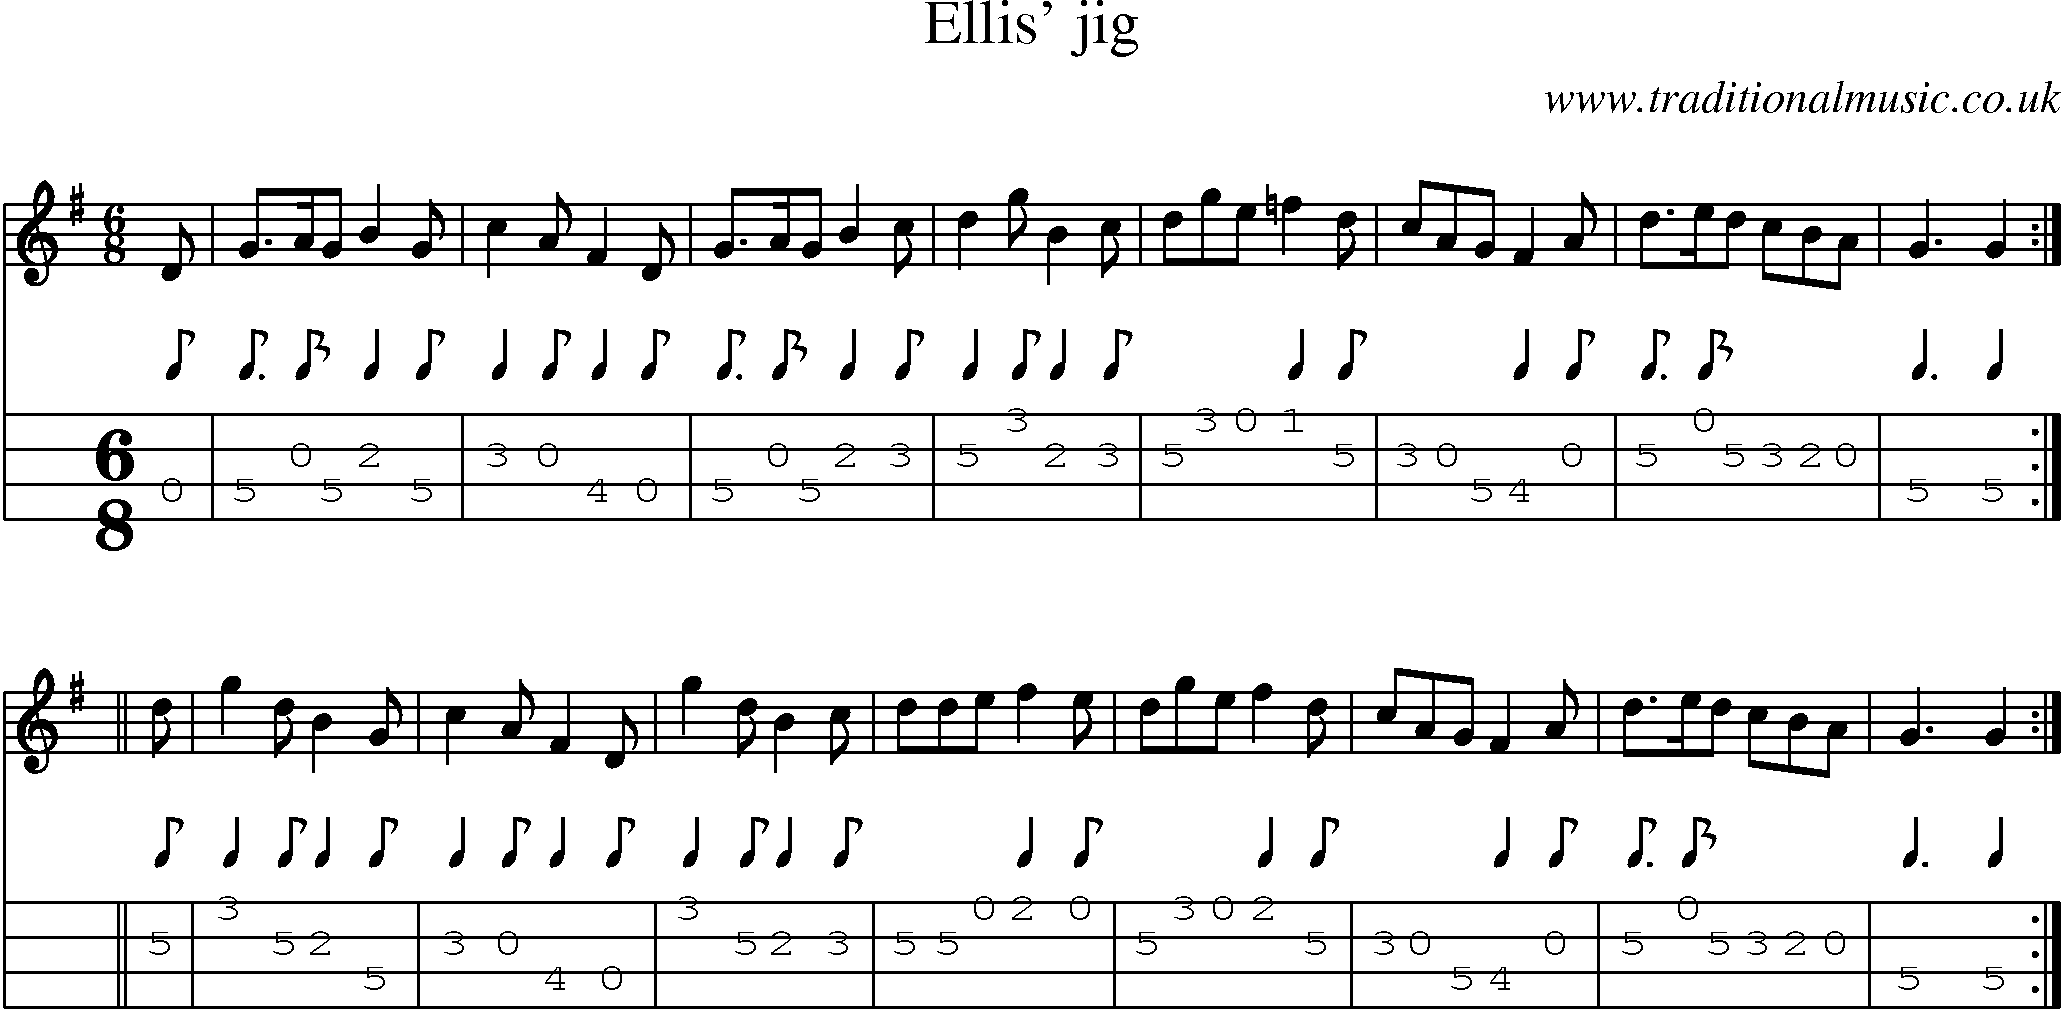 Music Score and Mandolin Tabs for Ellis Jig